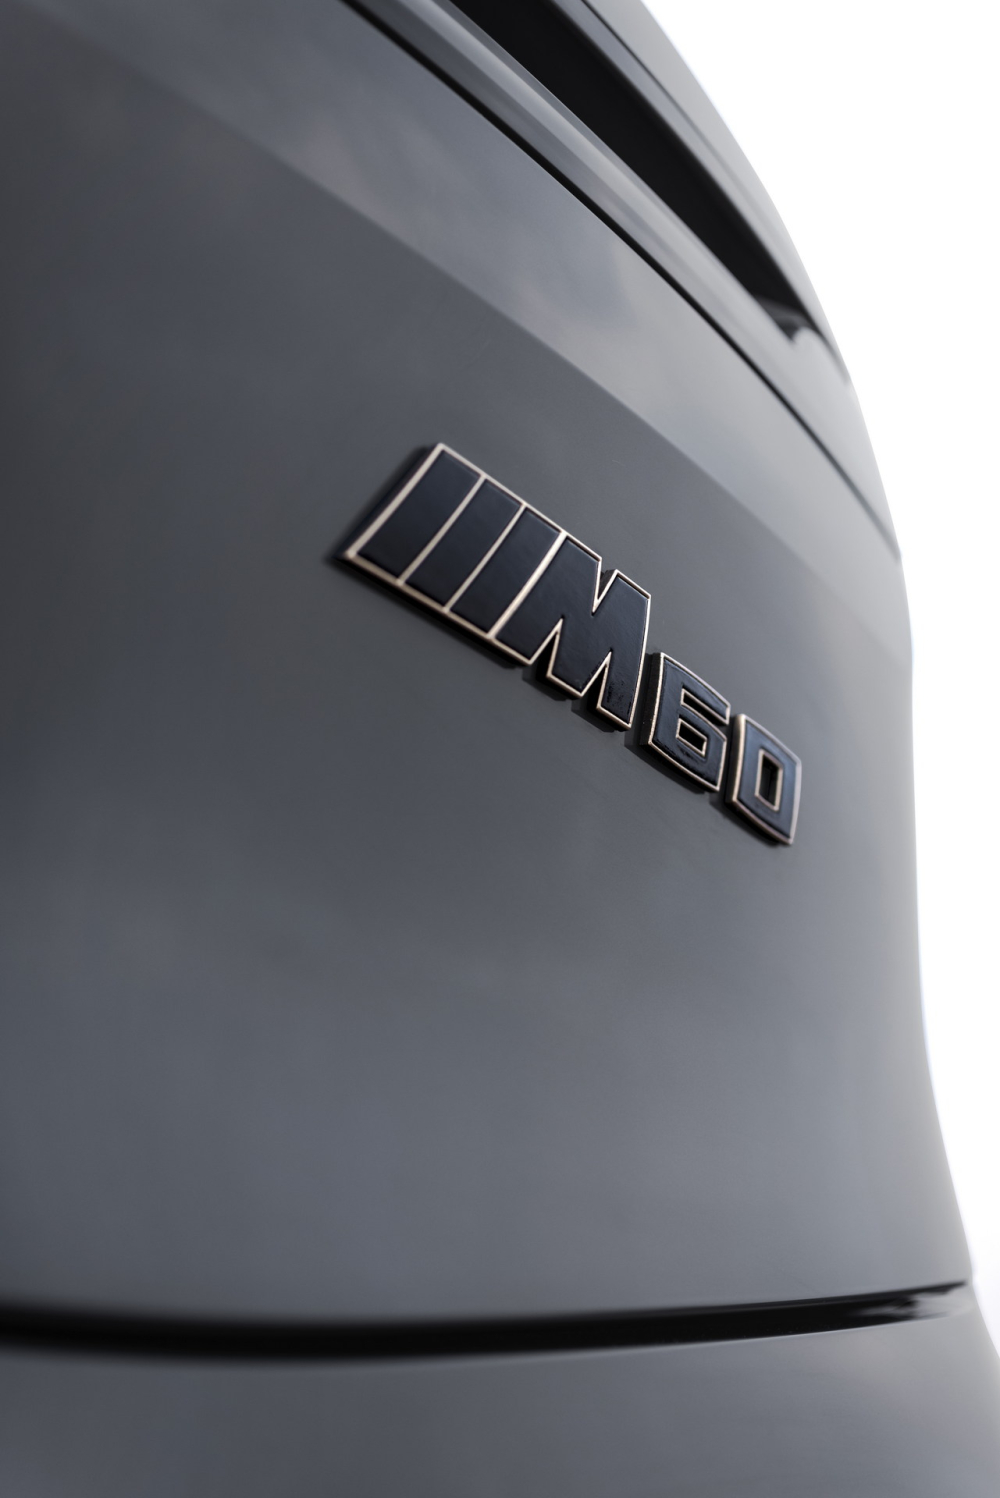 Logo M60 trên cửa cốp của BMW iX M60 2022